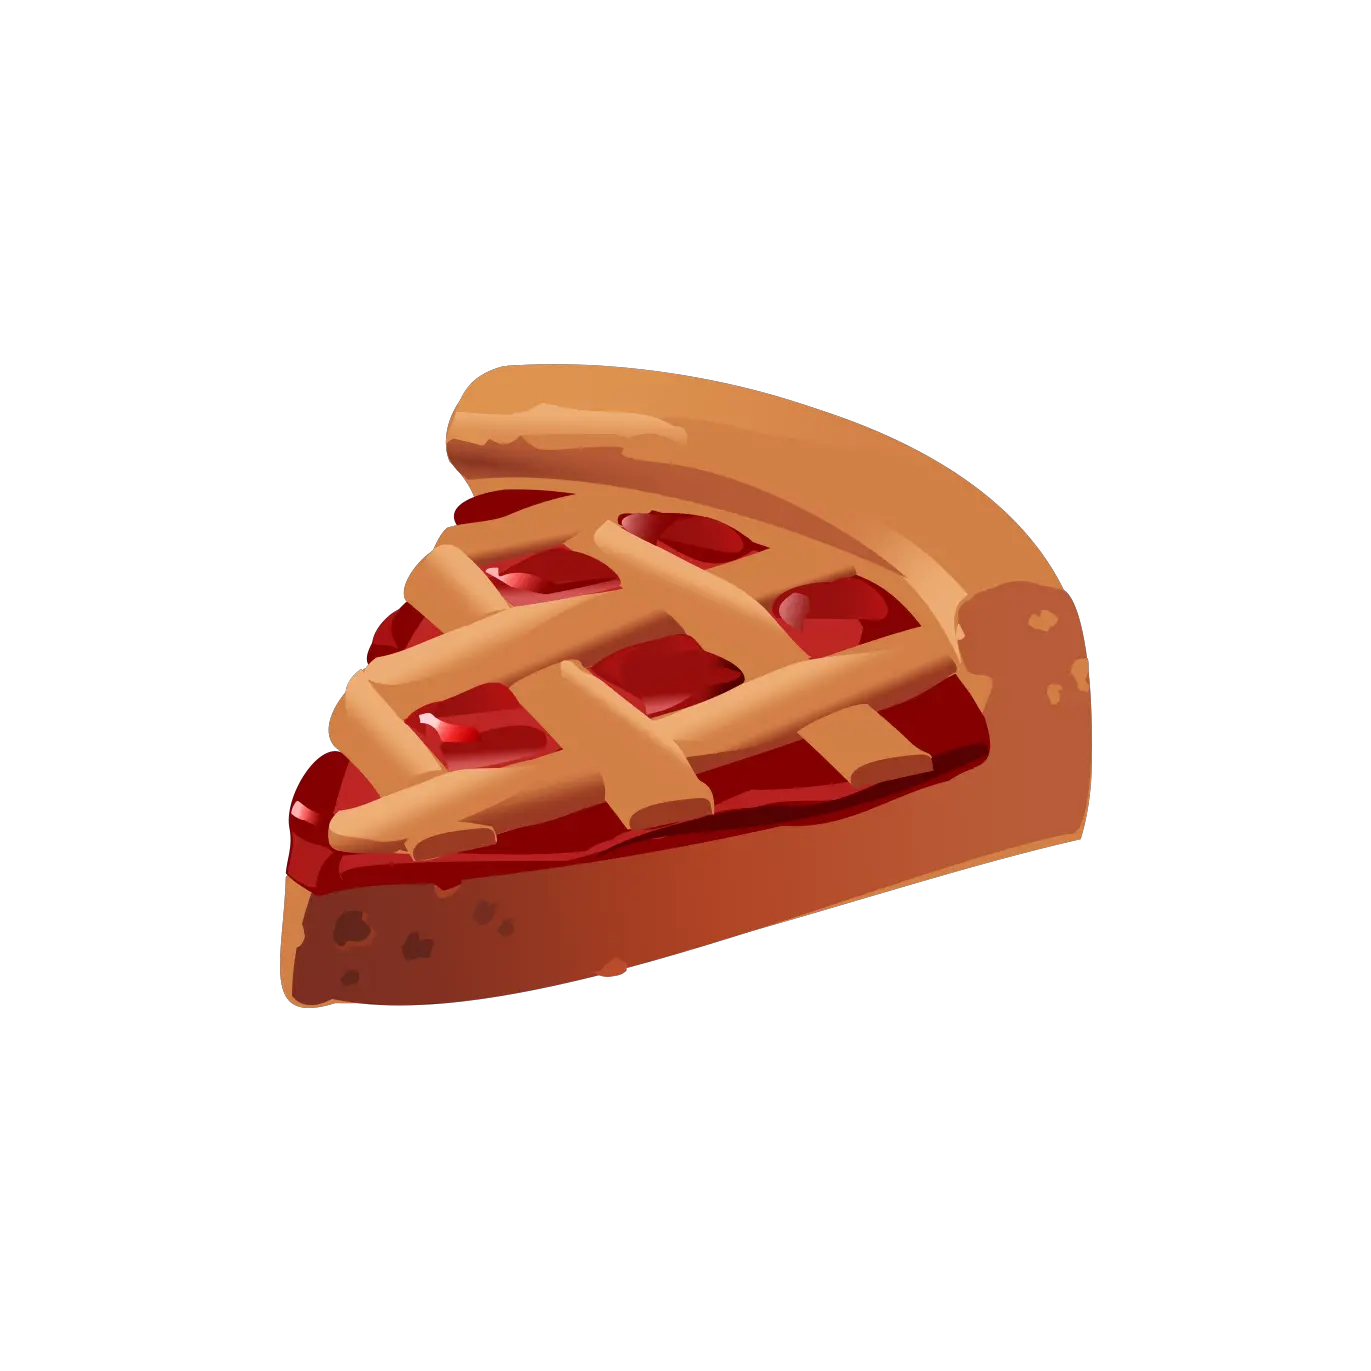 Pizza Slice Png Hd Image Free Download Pie Sticker Png Orange Slice Png